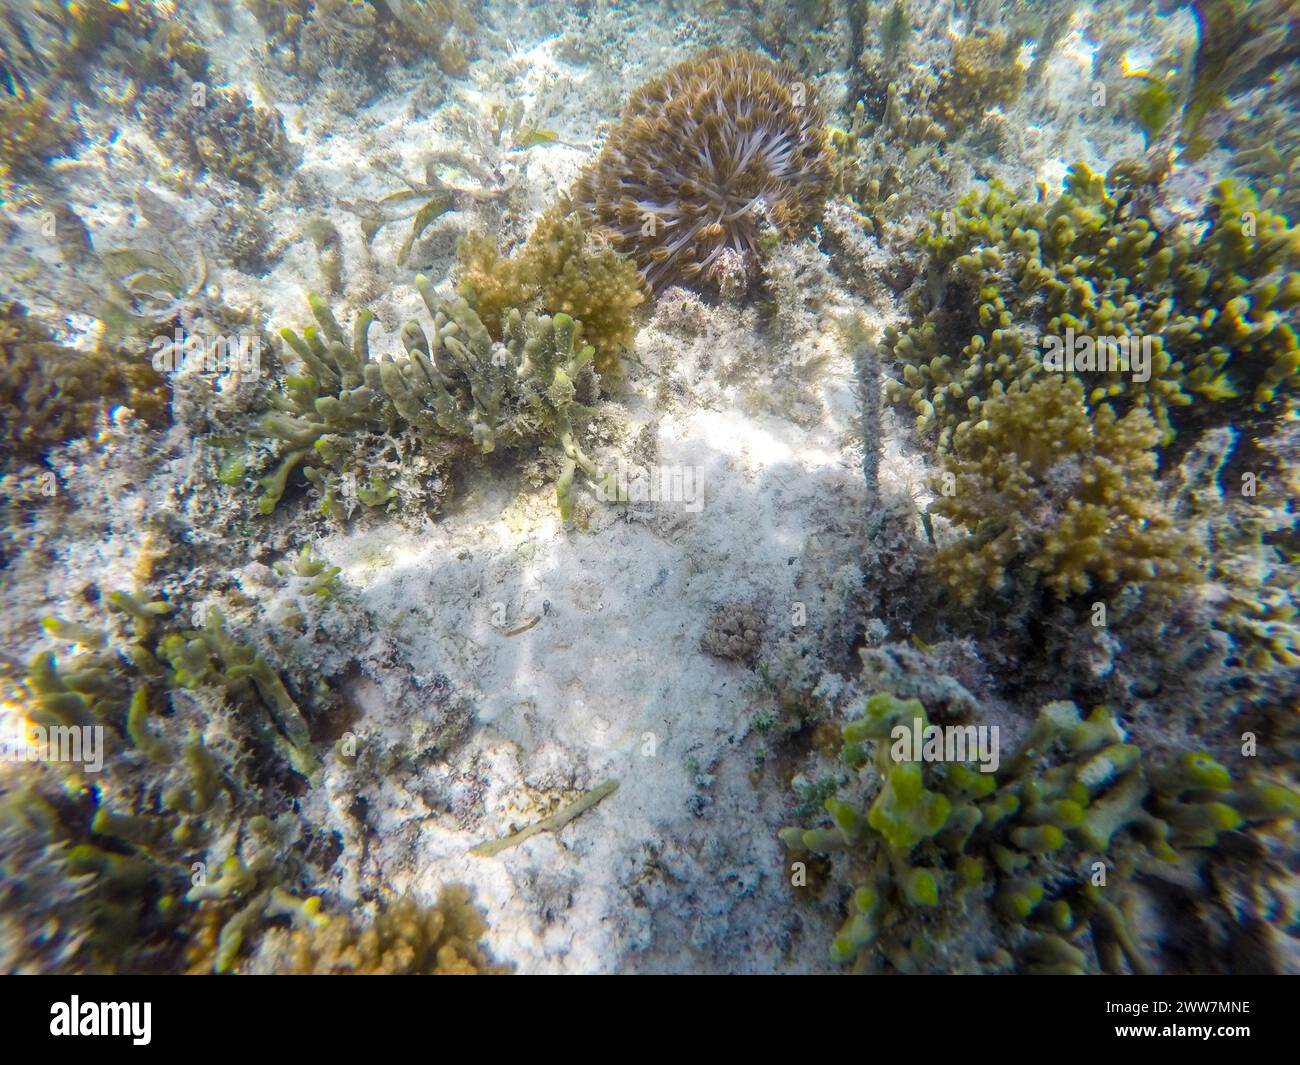 Underwater Photography of a coral reef, East Coast, Zanzibar Stock Photo